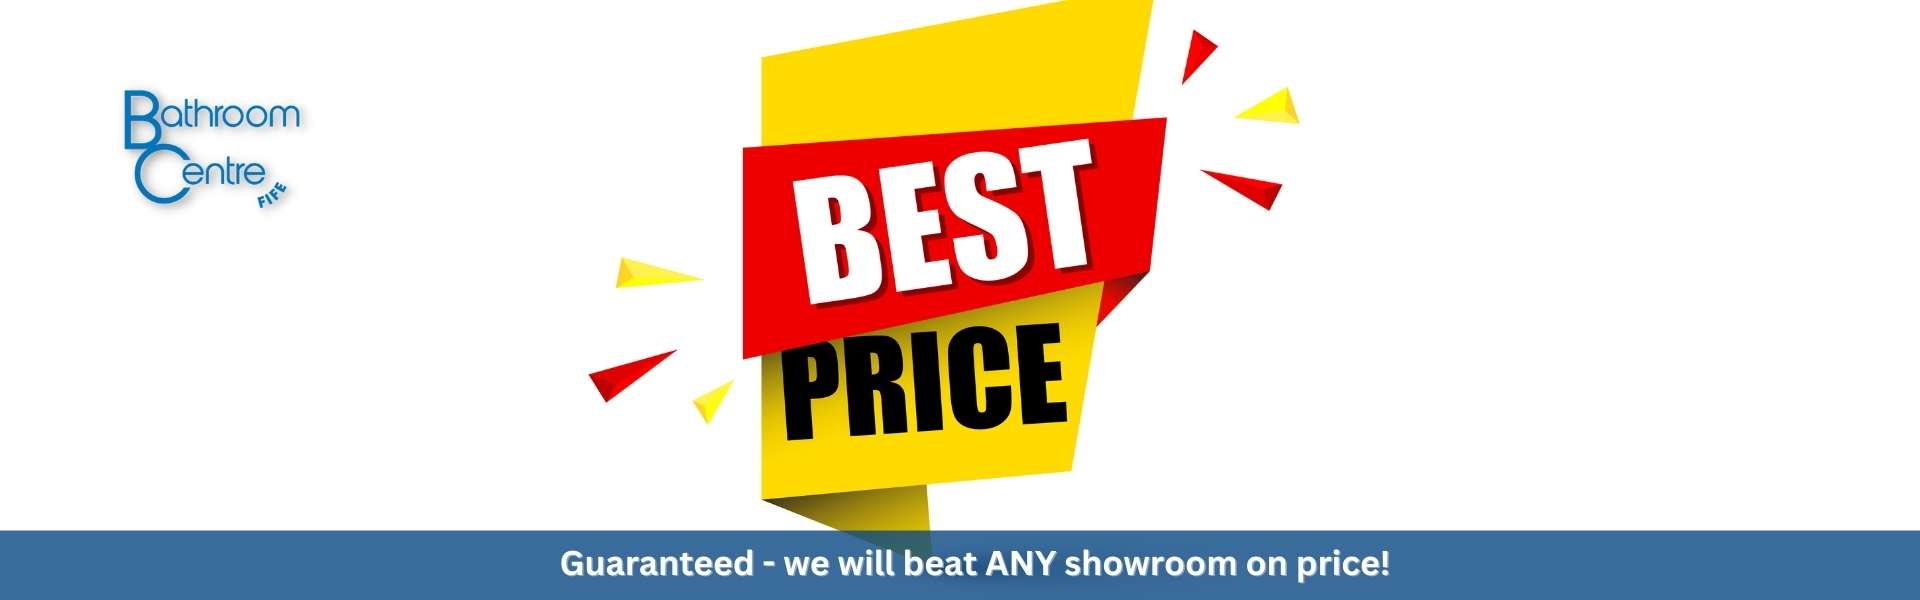 BCF - FB Ads Best Price Guaranteed image (1920 × 600px)
